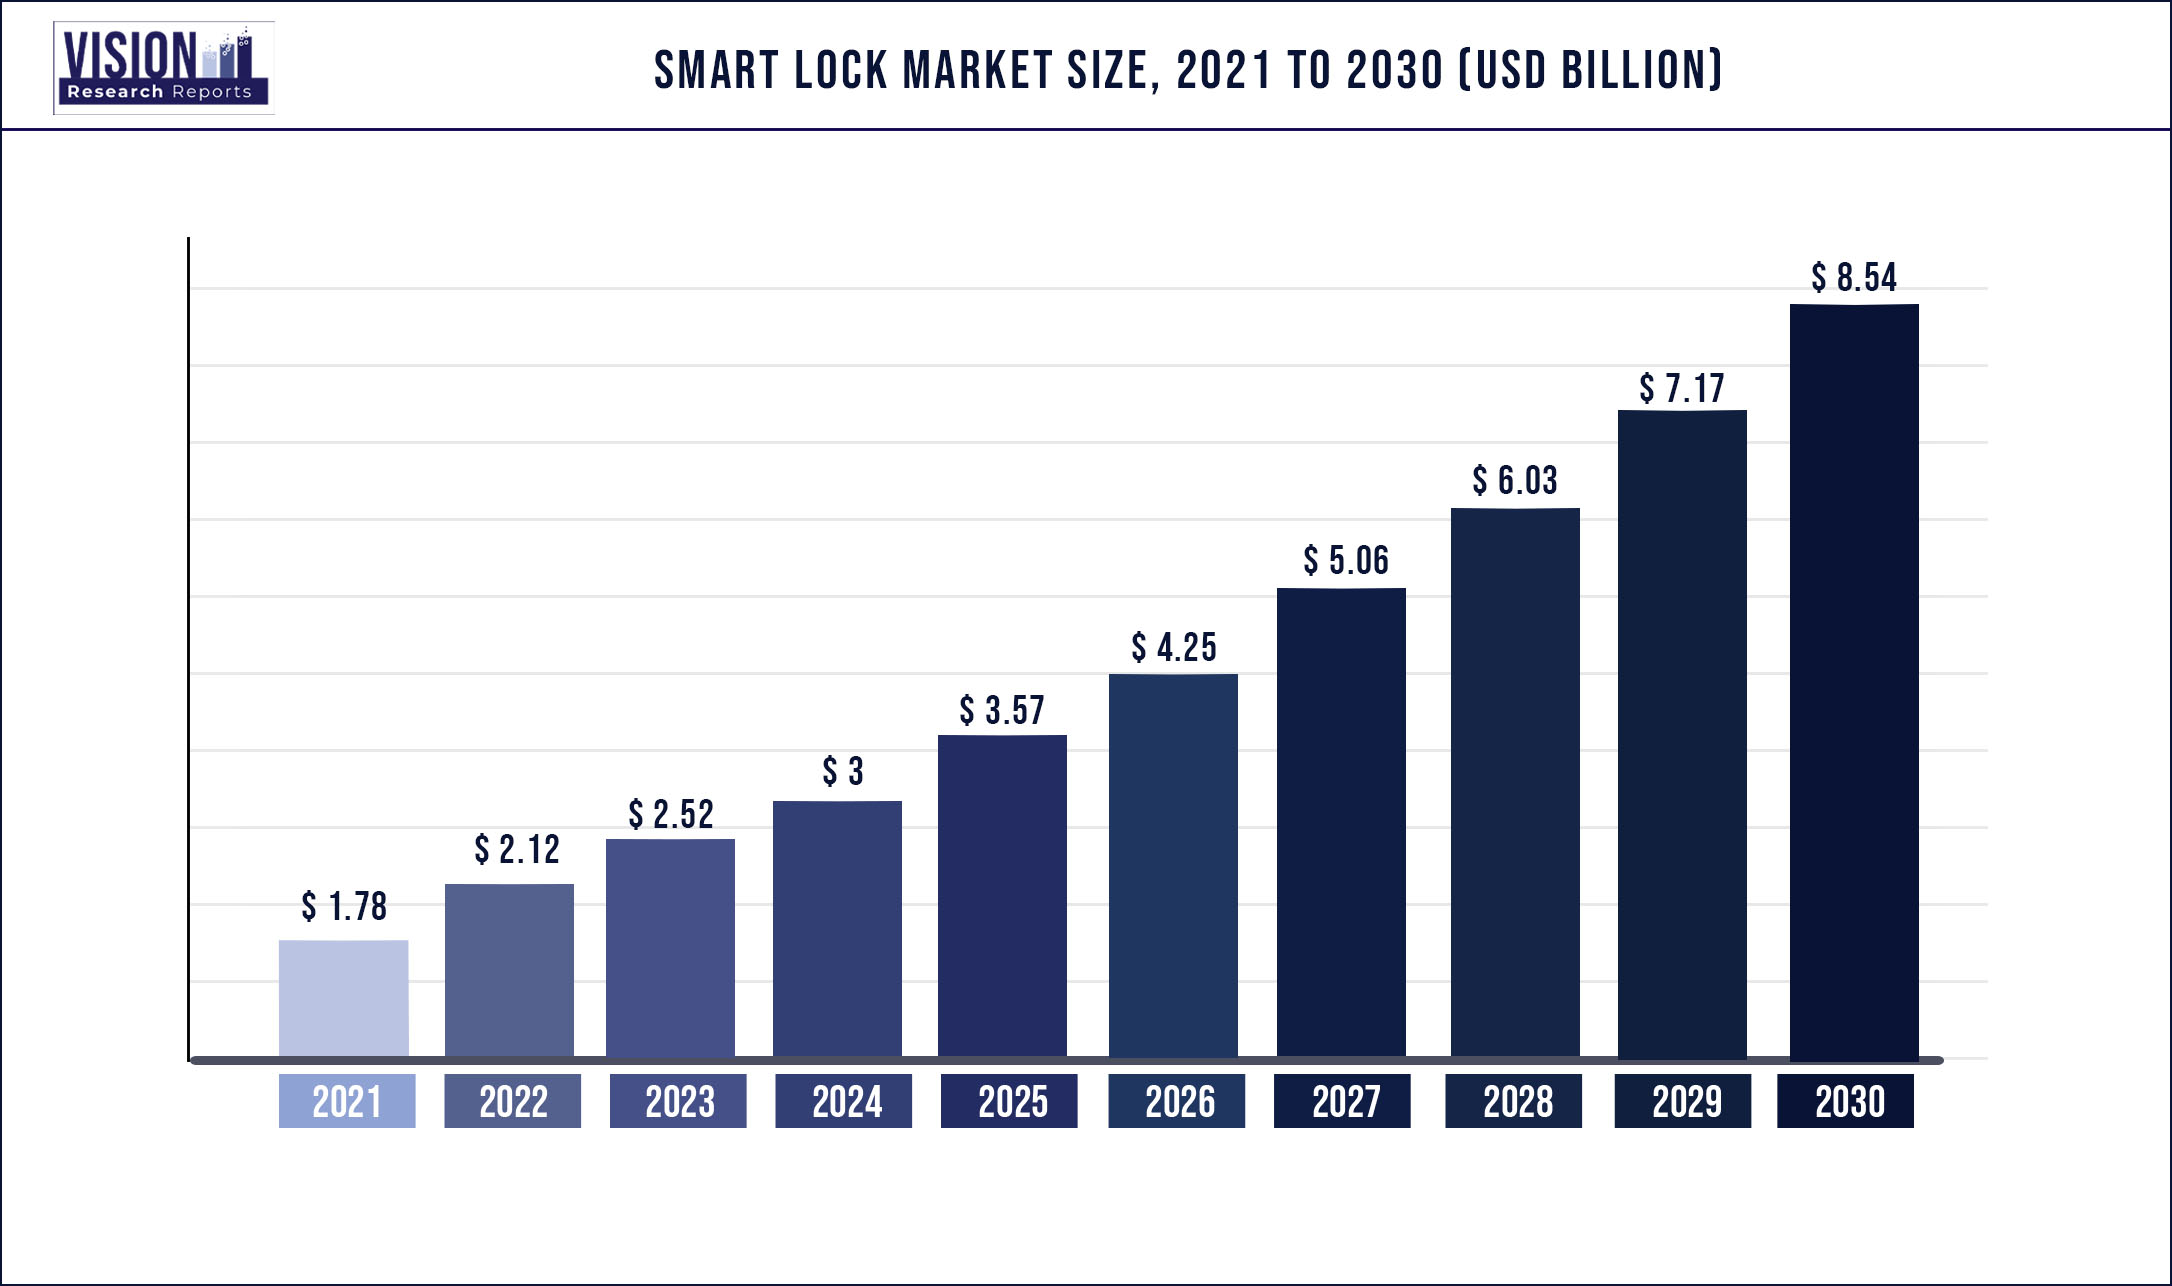 Smart Lock Market Size 2021 to 2030